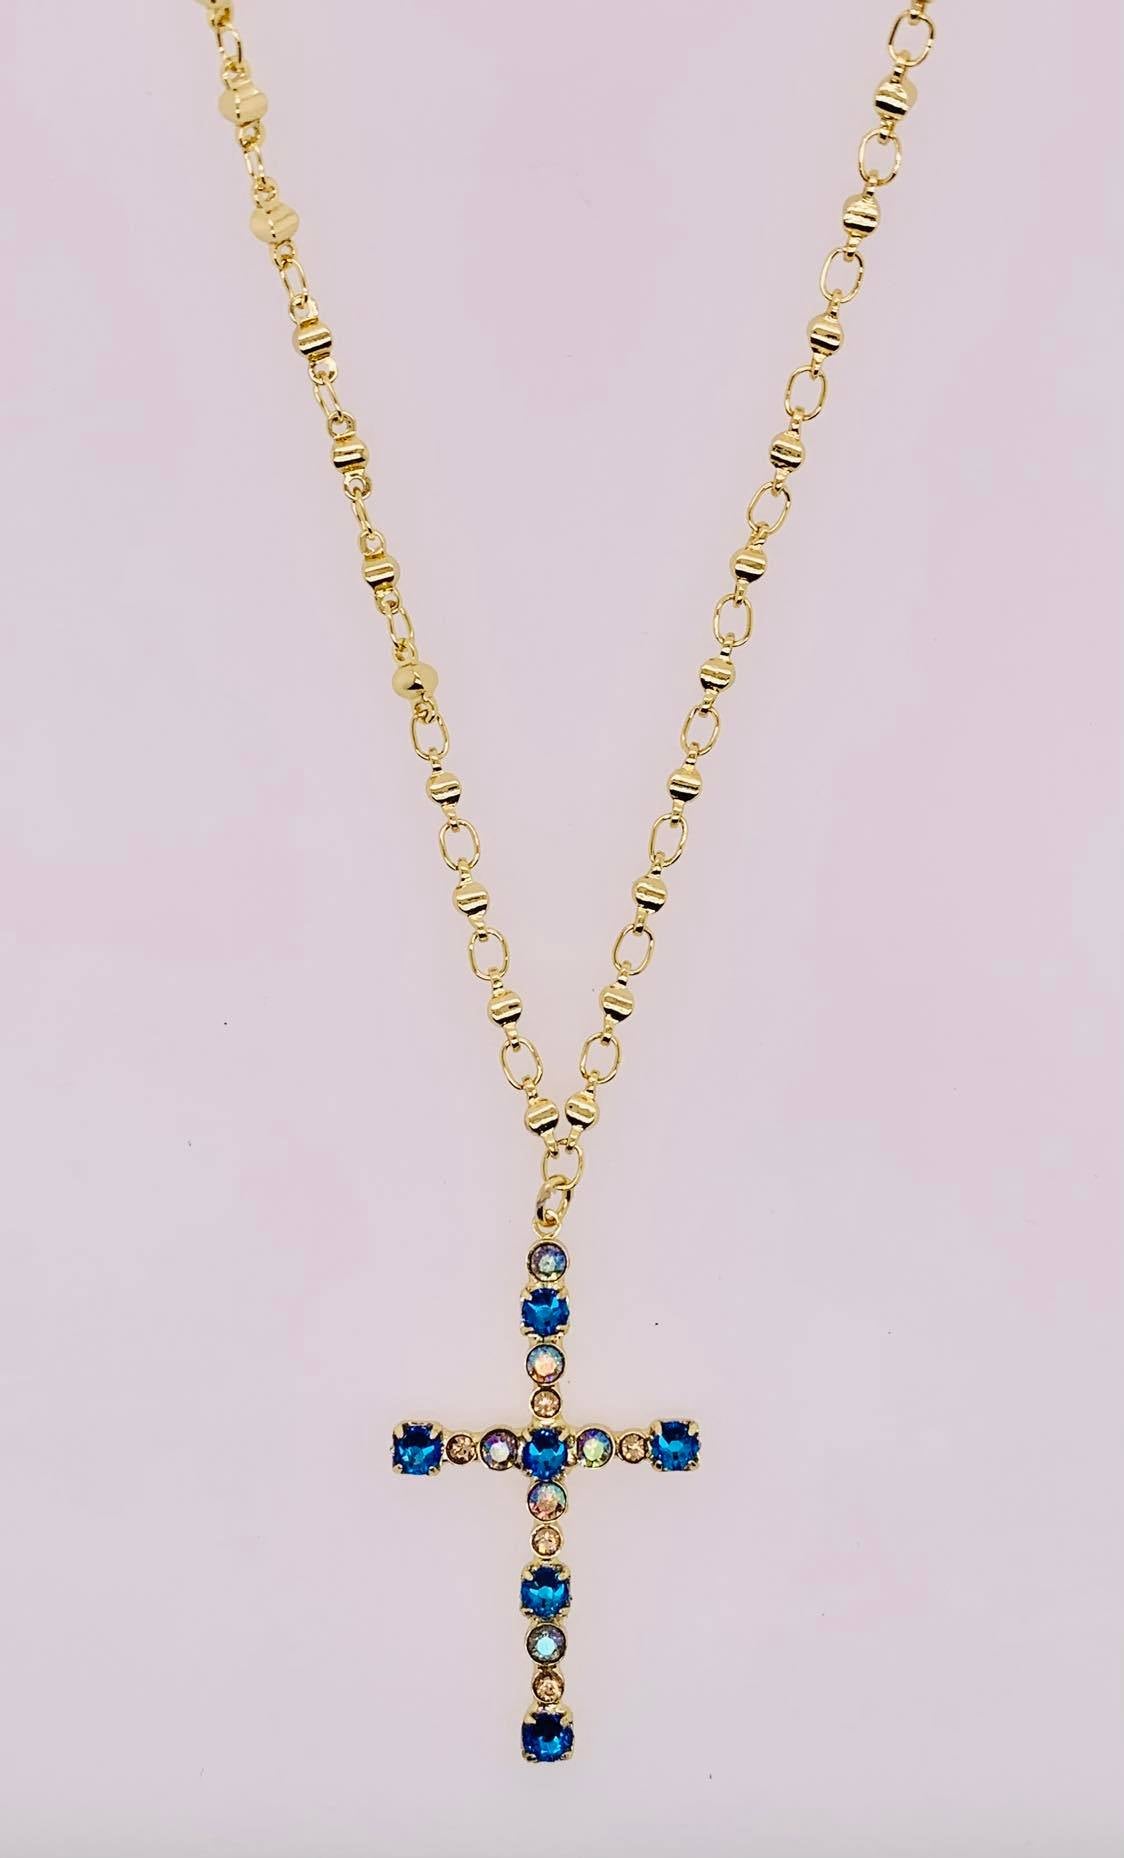 Charmaine Cross Pendant Necklace